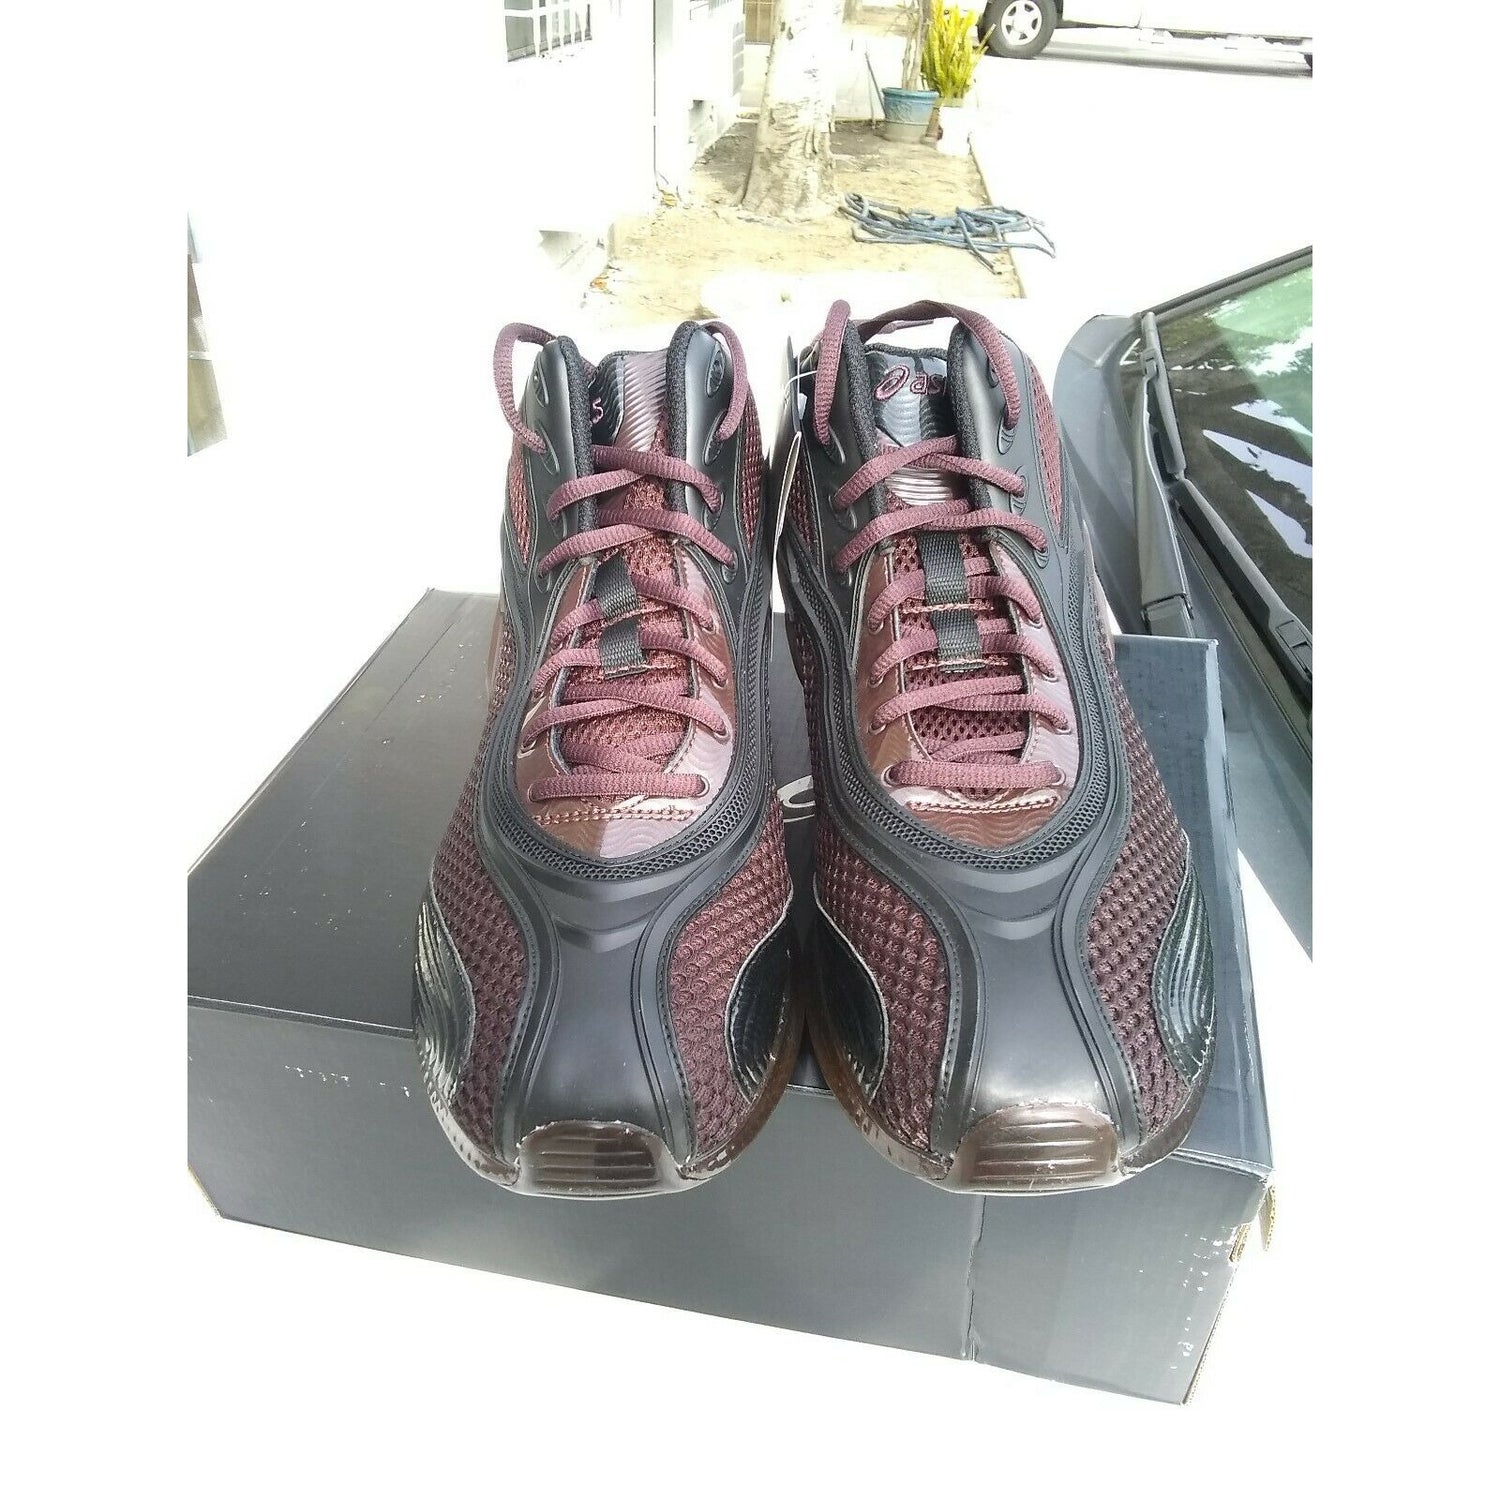 Asics Men's Gel Sokat Infinity 2 Running Shoes Coffee Black Size 11.5 US